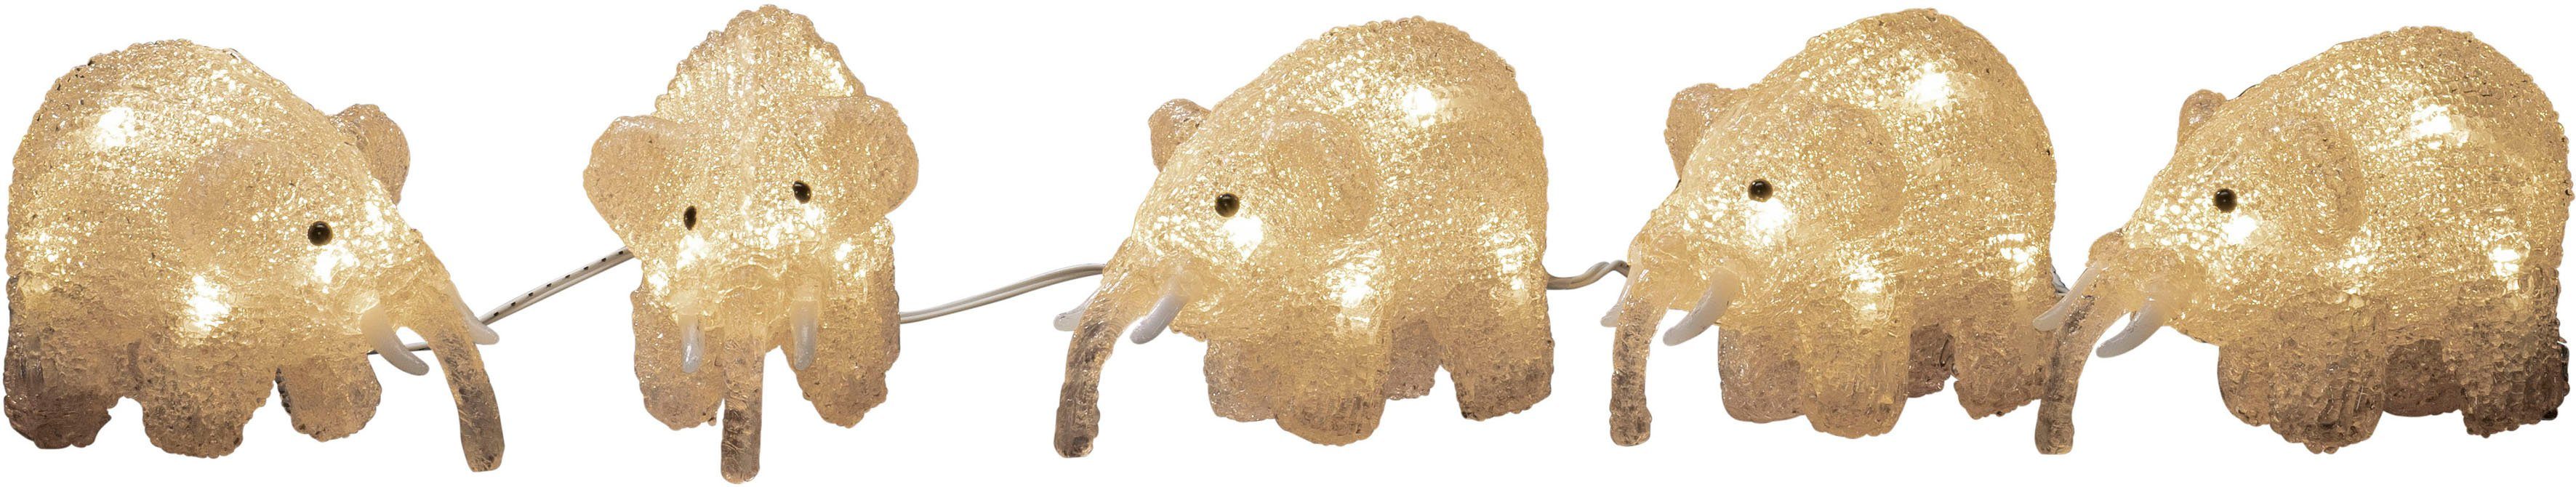 KONSTSMIDE LED Dekofigur LED Acryl Elefanten, 5er-Set, 40 warm weiße Dioden, LED fest integriert, Warmweiß